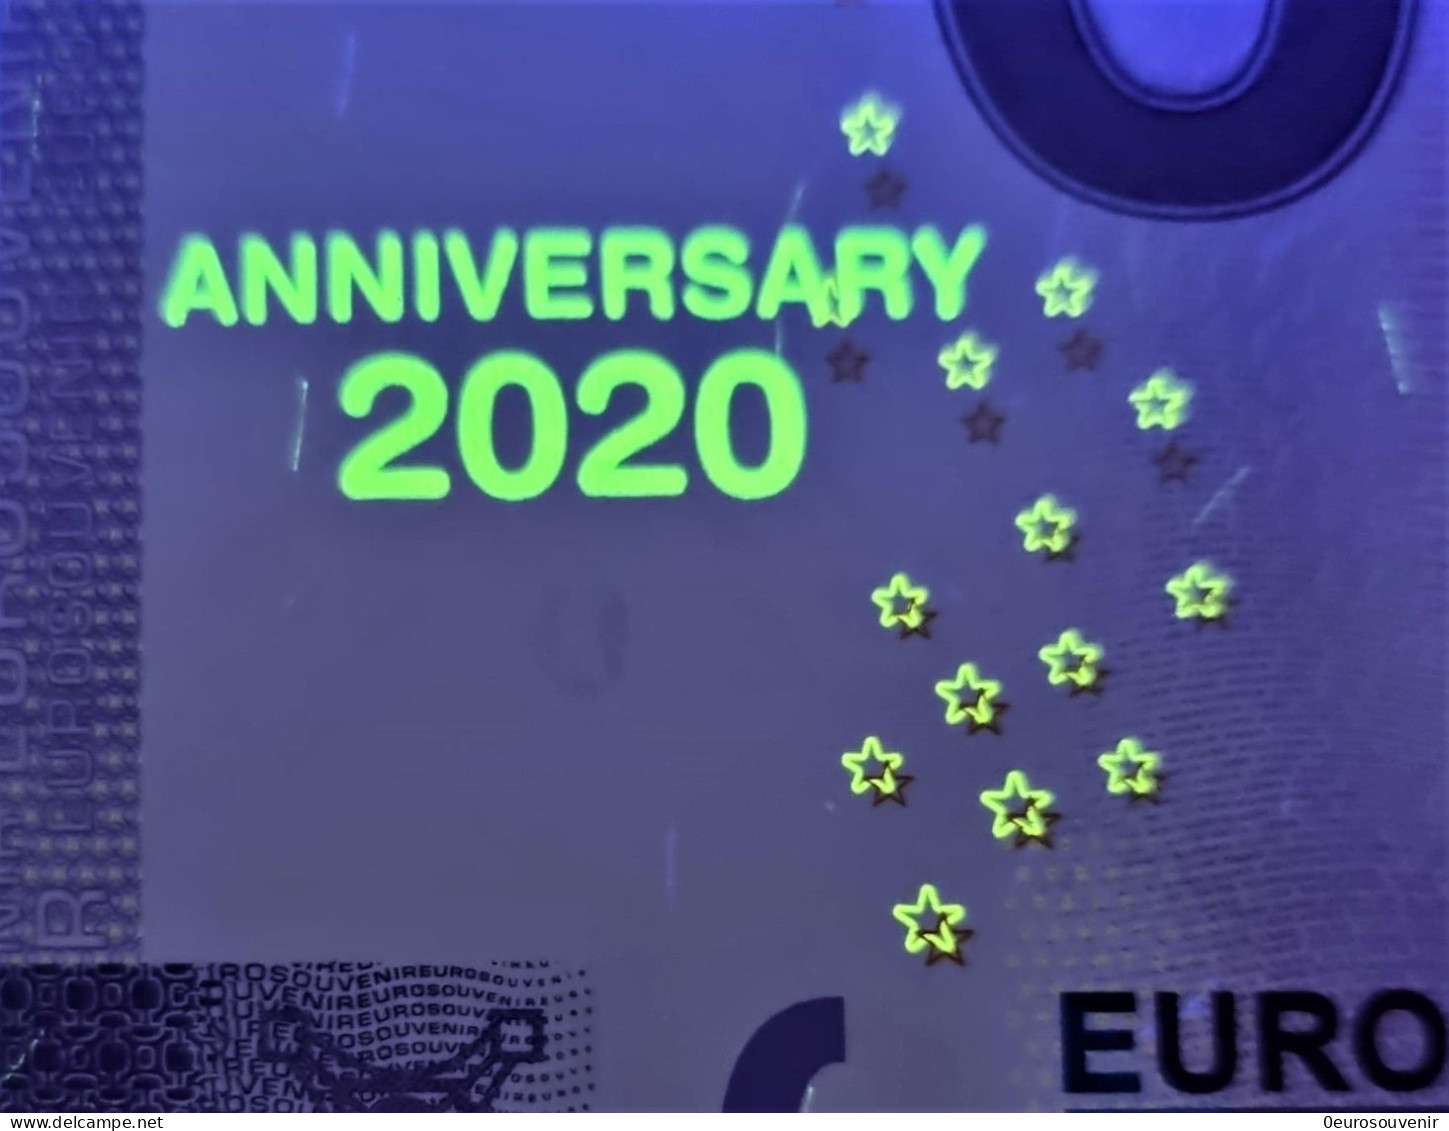 0-Euro XEMT 3 2020 WILHELMA STUTTGART - ZOO Set NORMAL+ANNIVERSARY - Privatentwürfe